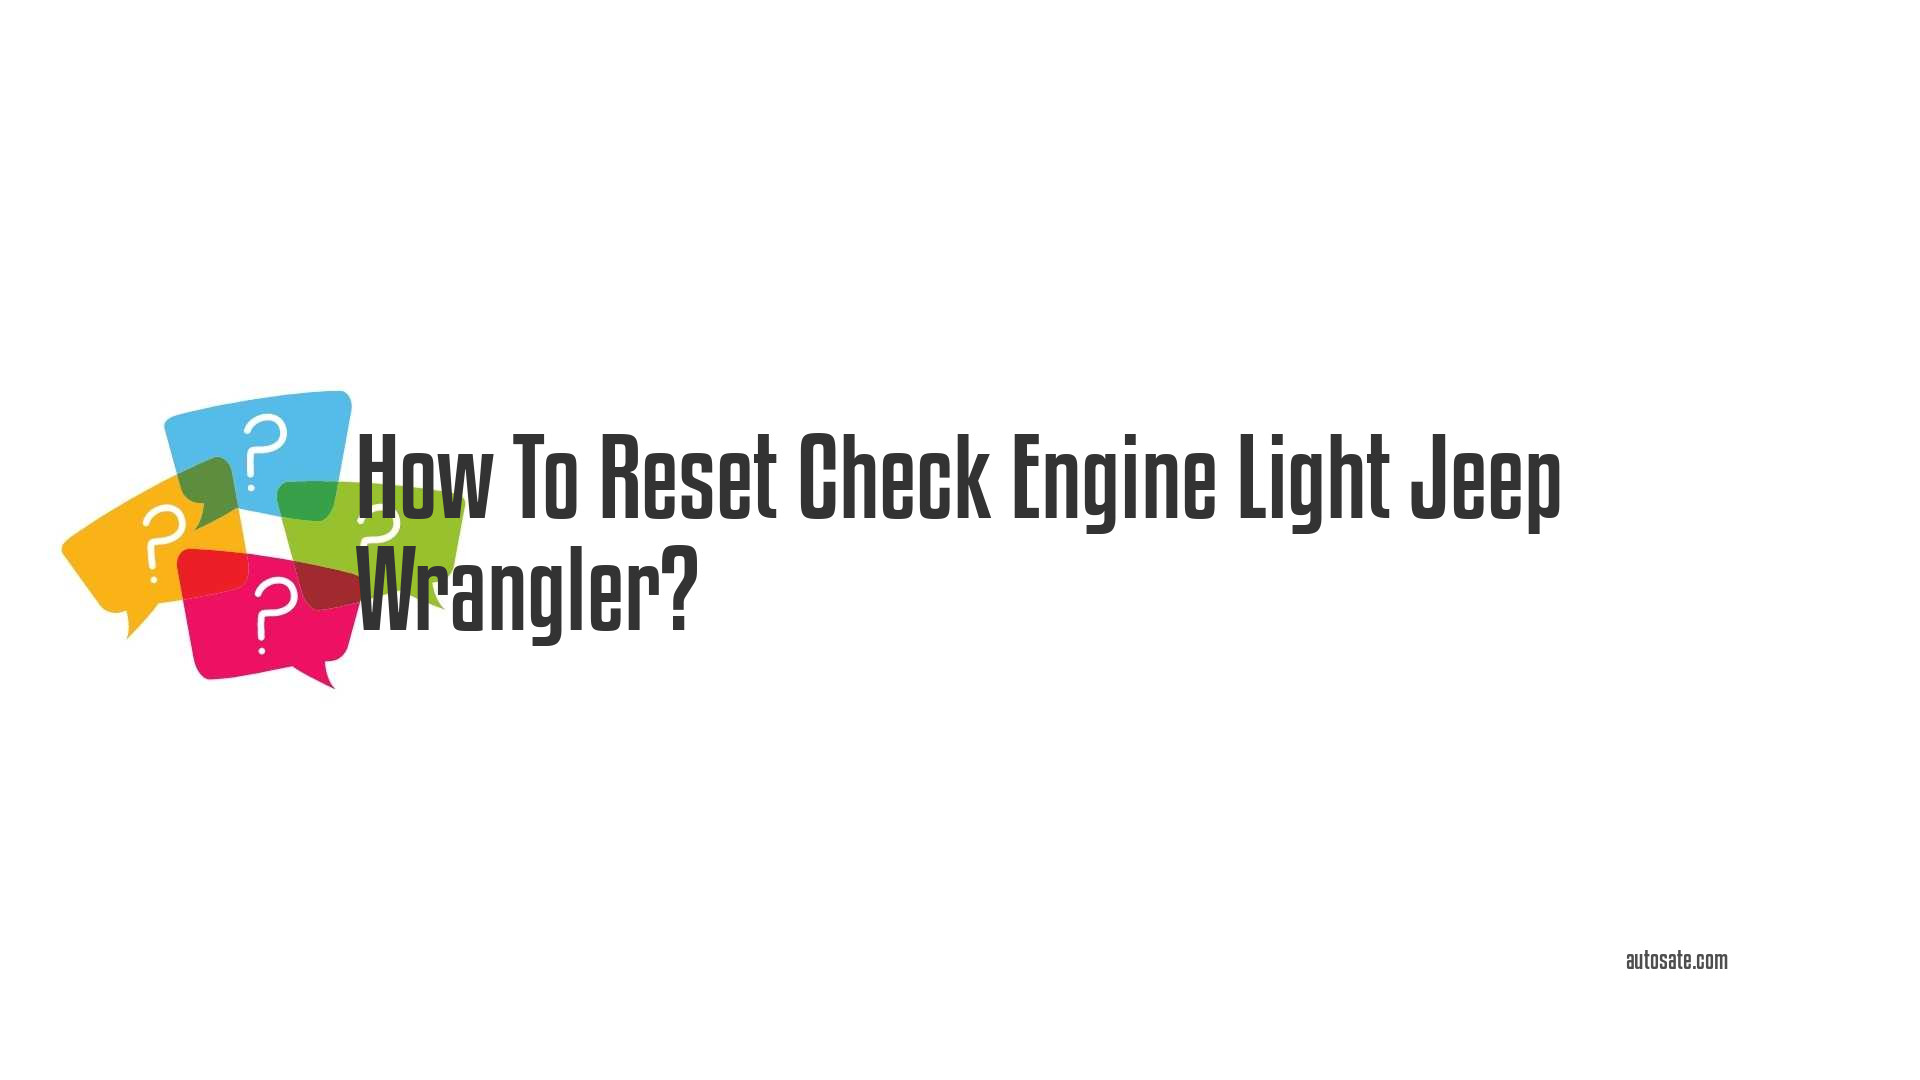 How To Reset Check Engine Light Jeep Wrangler?